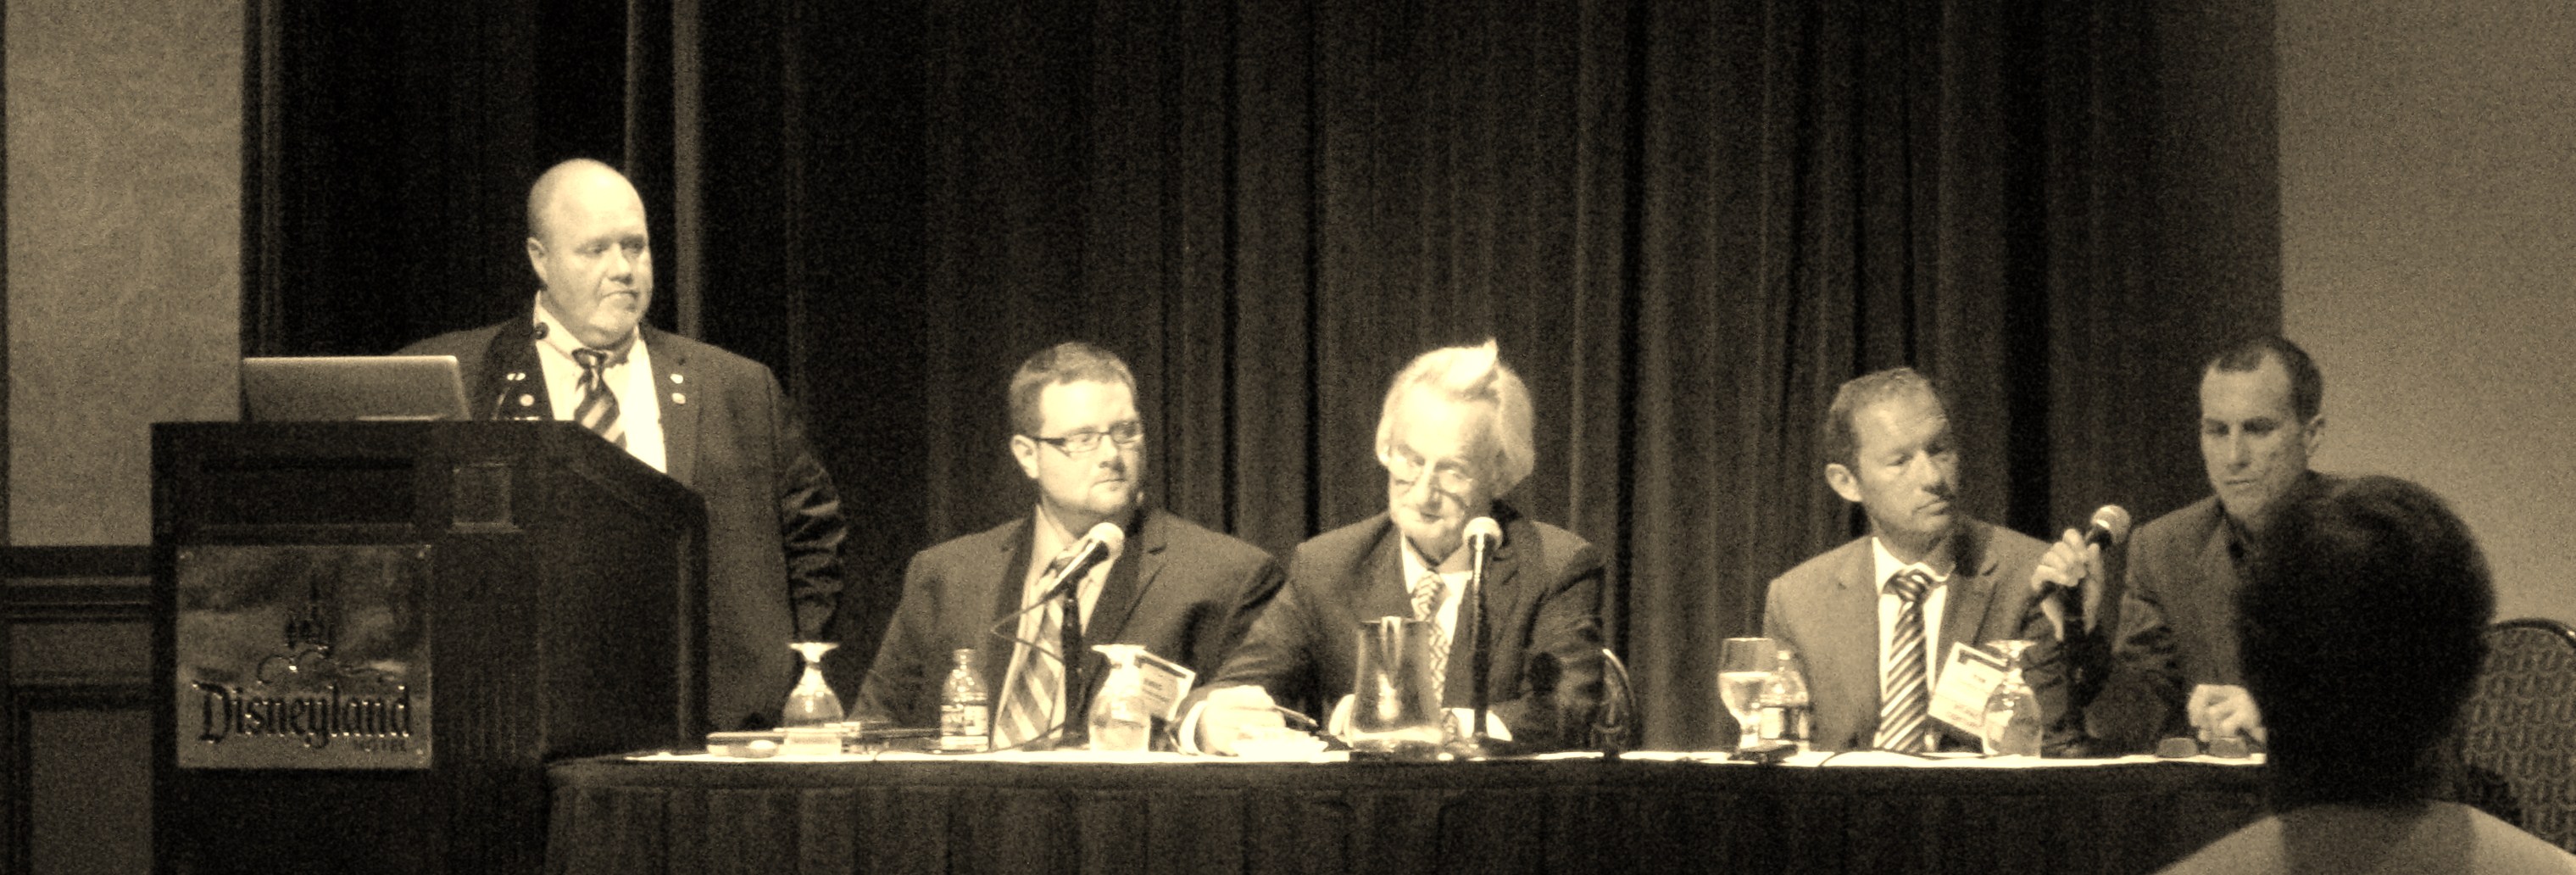 AAOMPT 2011 Keynote Panel